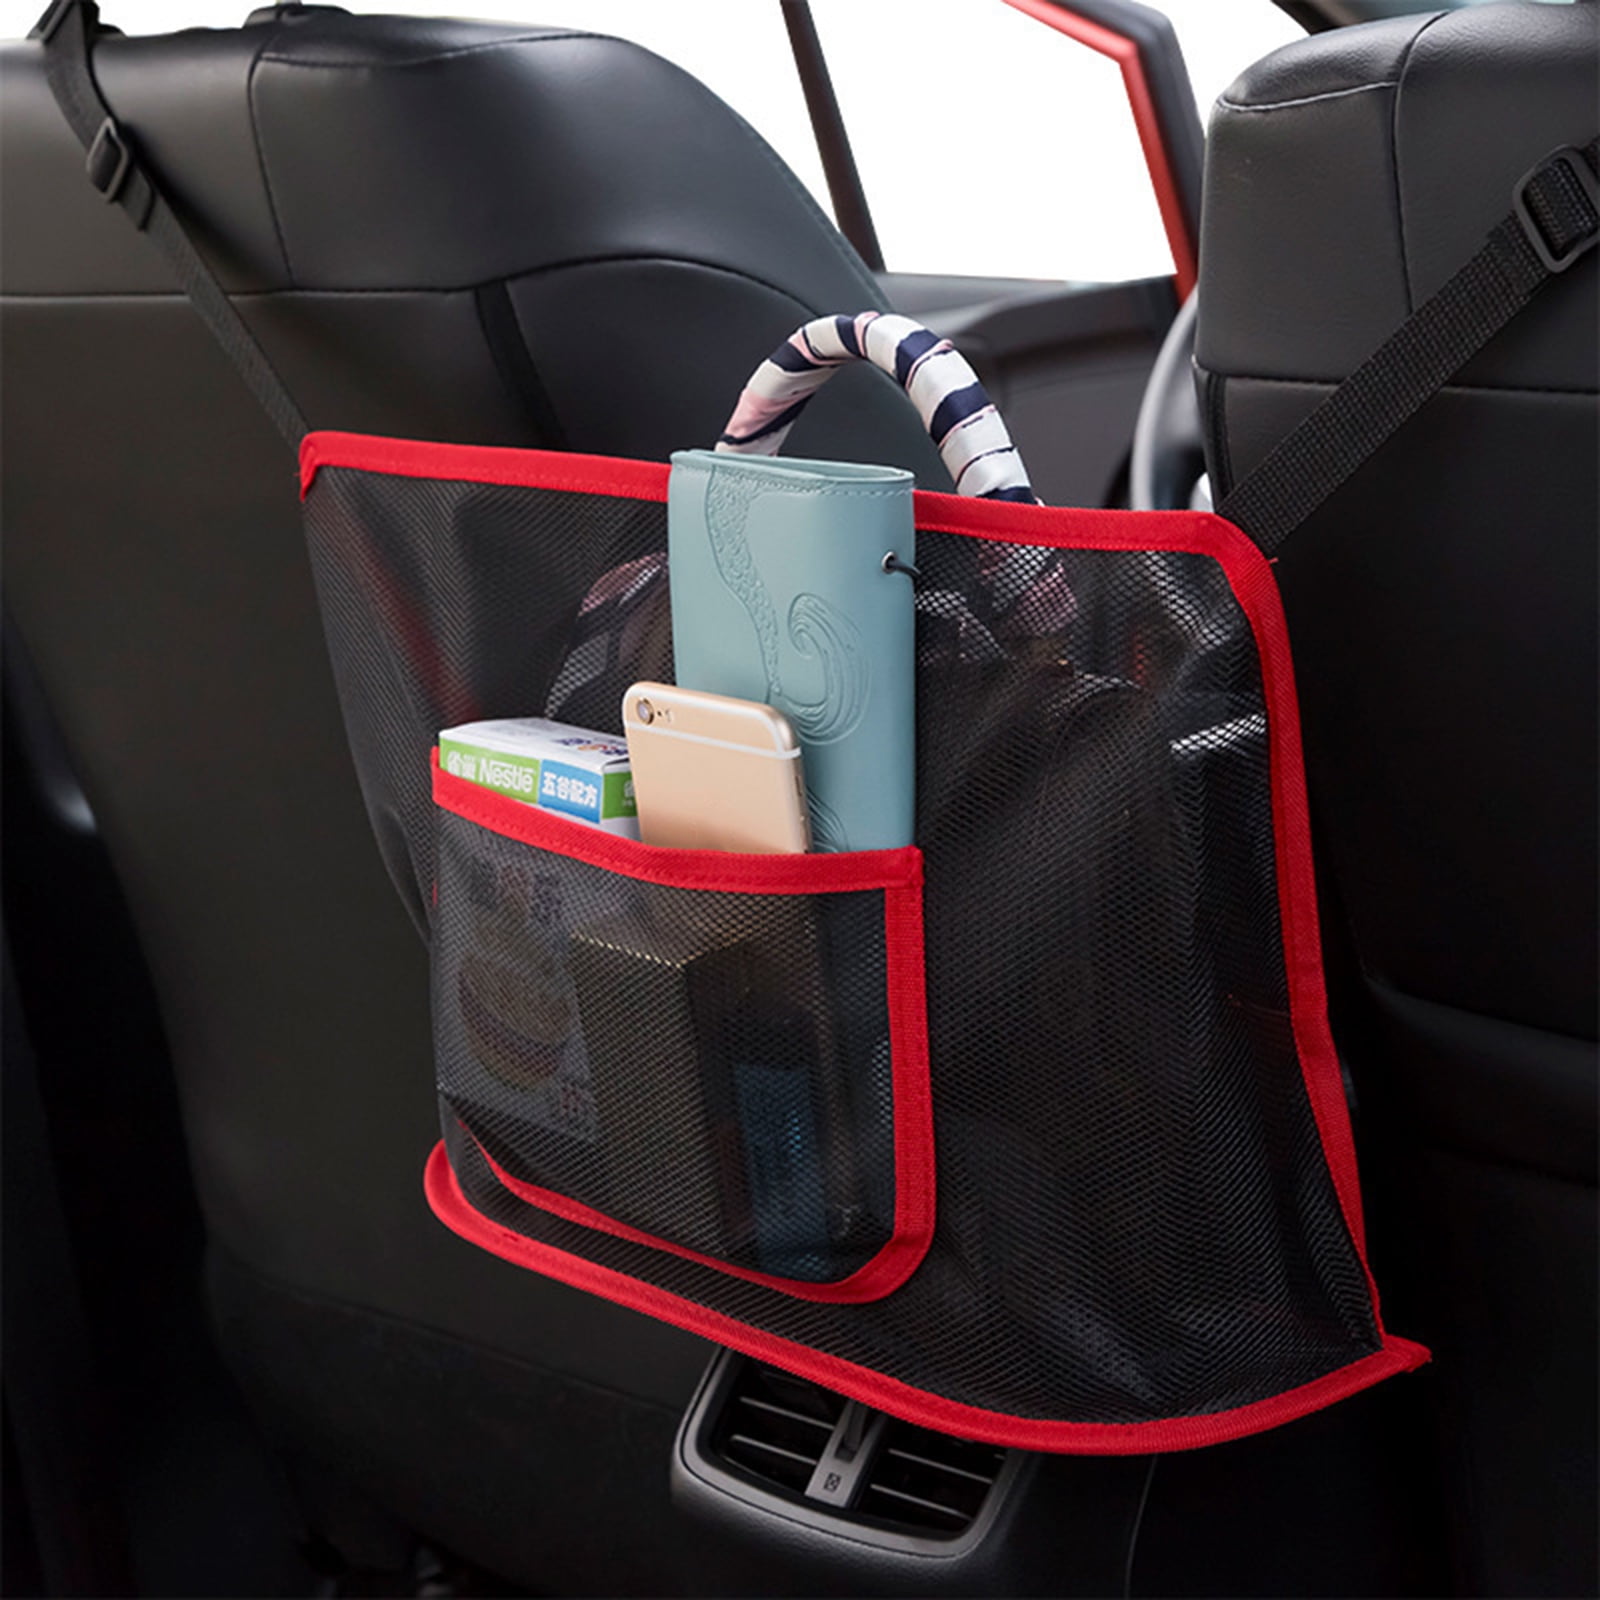 Car Net Pocket Handbag Holder Seat Back Organizer Fit Most of Car Purse Pocket Driver Seat Storage Bag For Cars Car Net Pocket Organizer For Phone Document Car Purse Pouch Barrier of Backseat Pet Kids